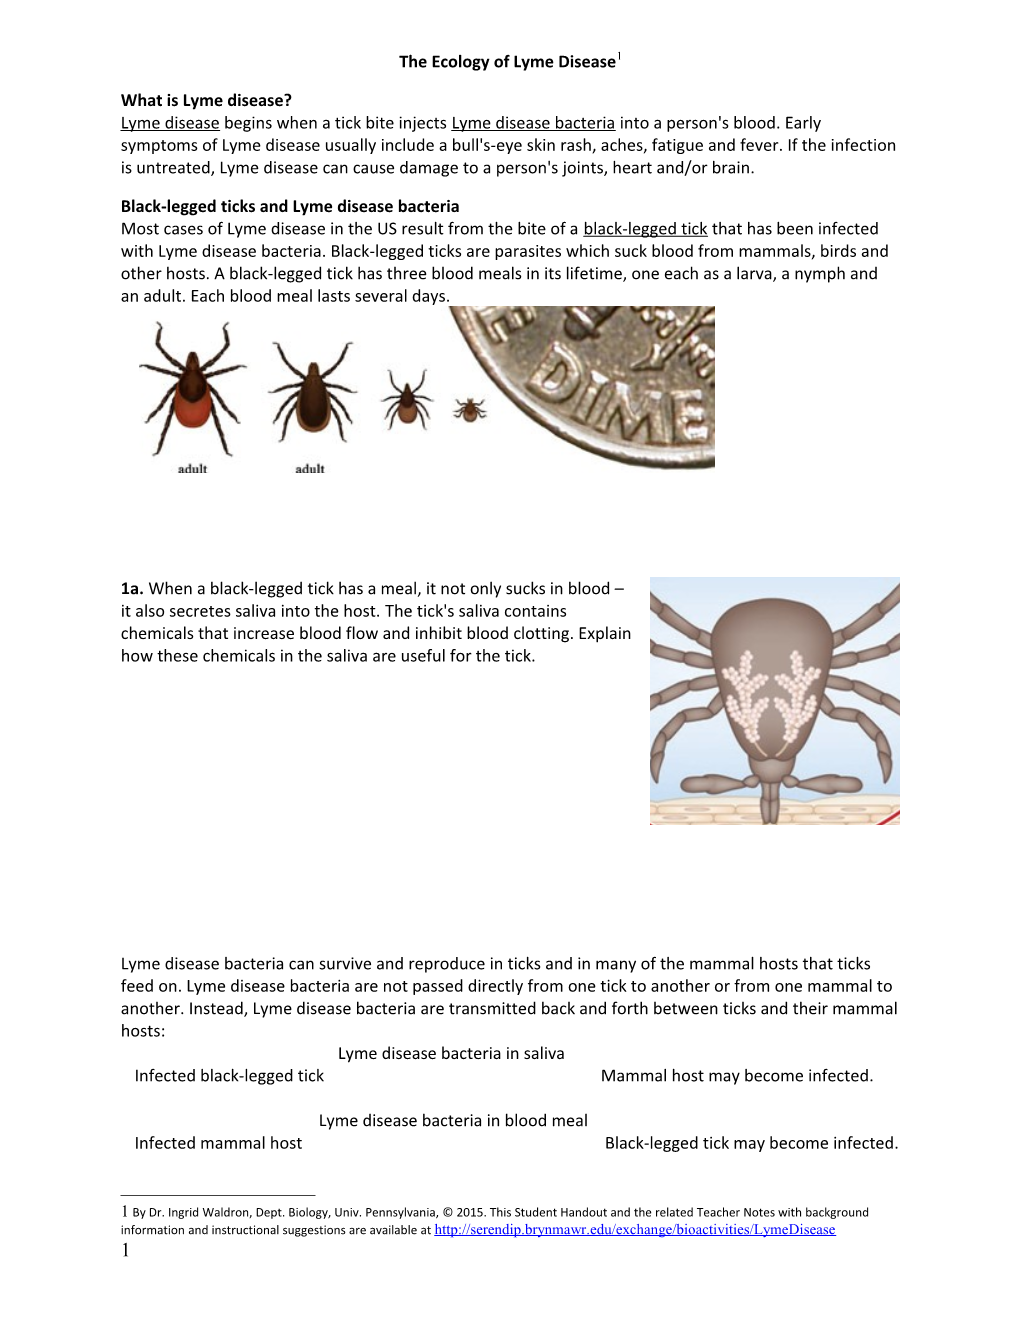 Black-Legged Ticks and Lyme Disease Bacteria